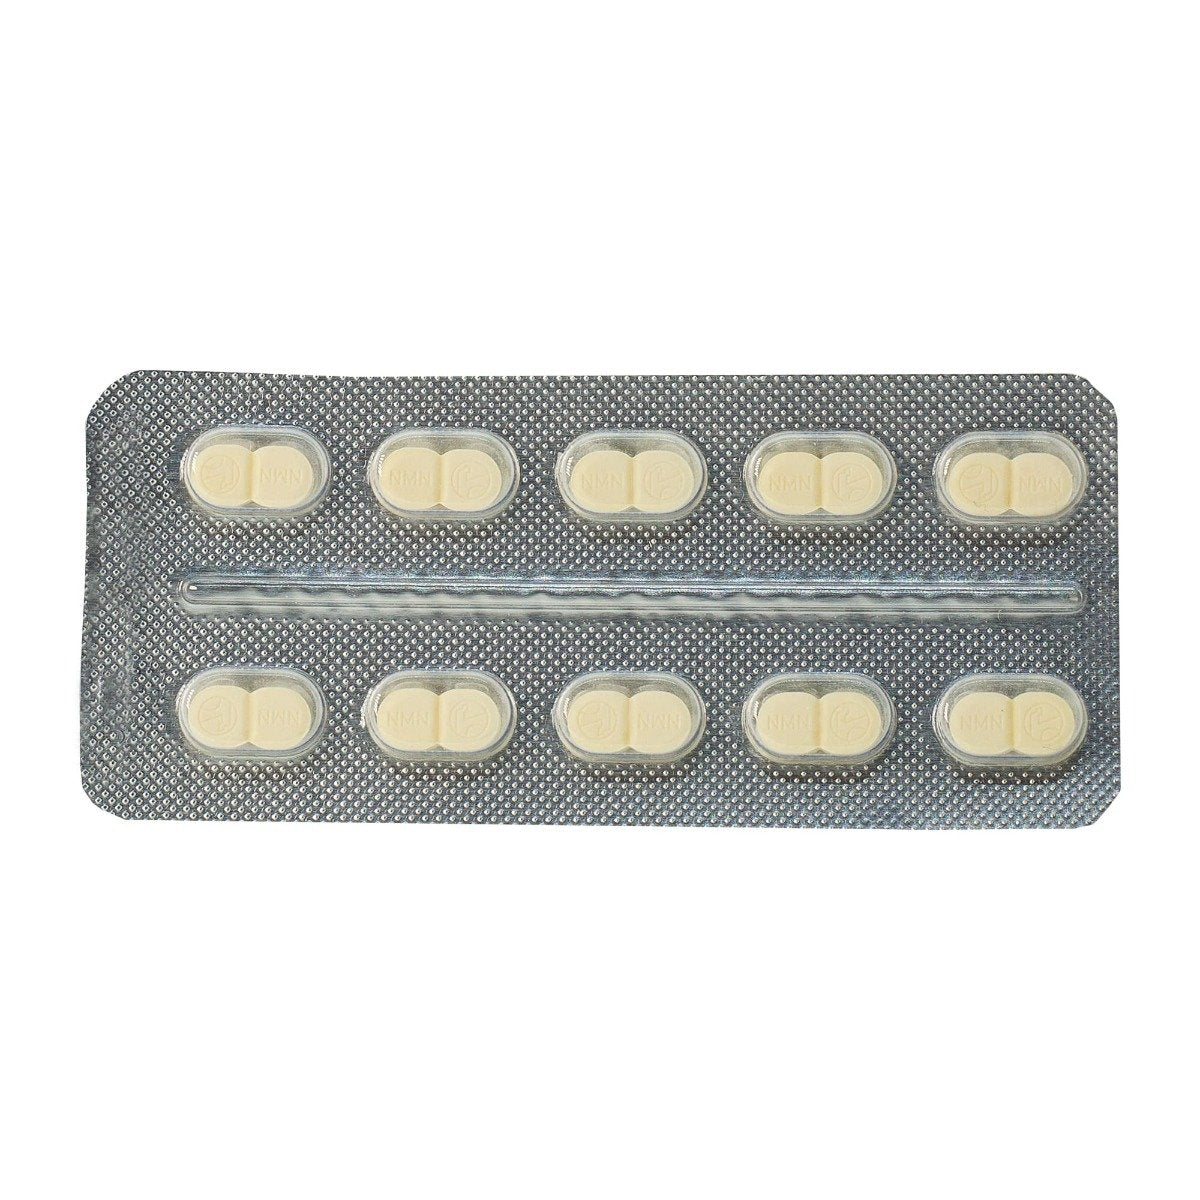 Amaryl 3 mg - 30 Tablets - Bloom Pharmacy